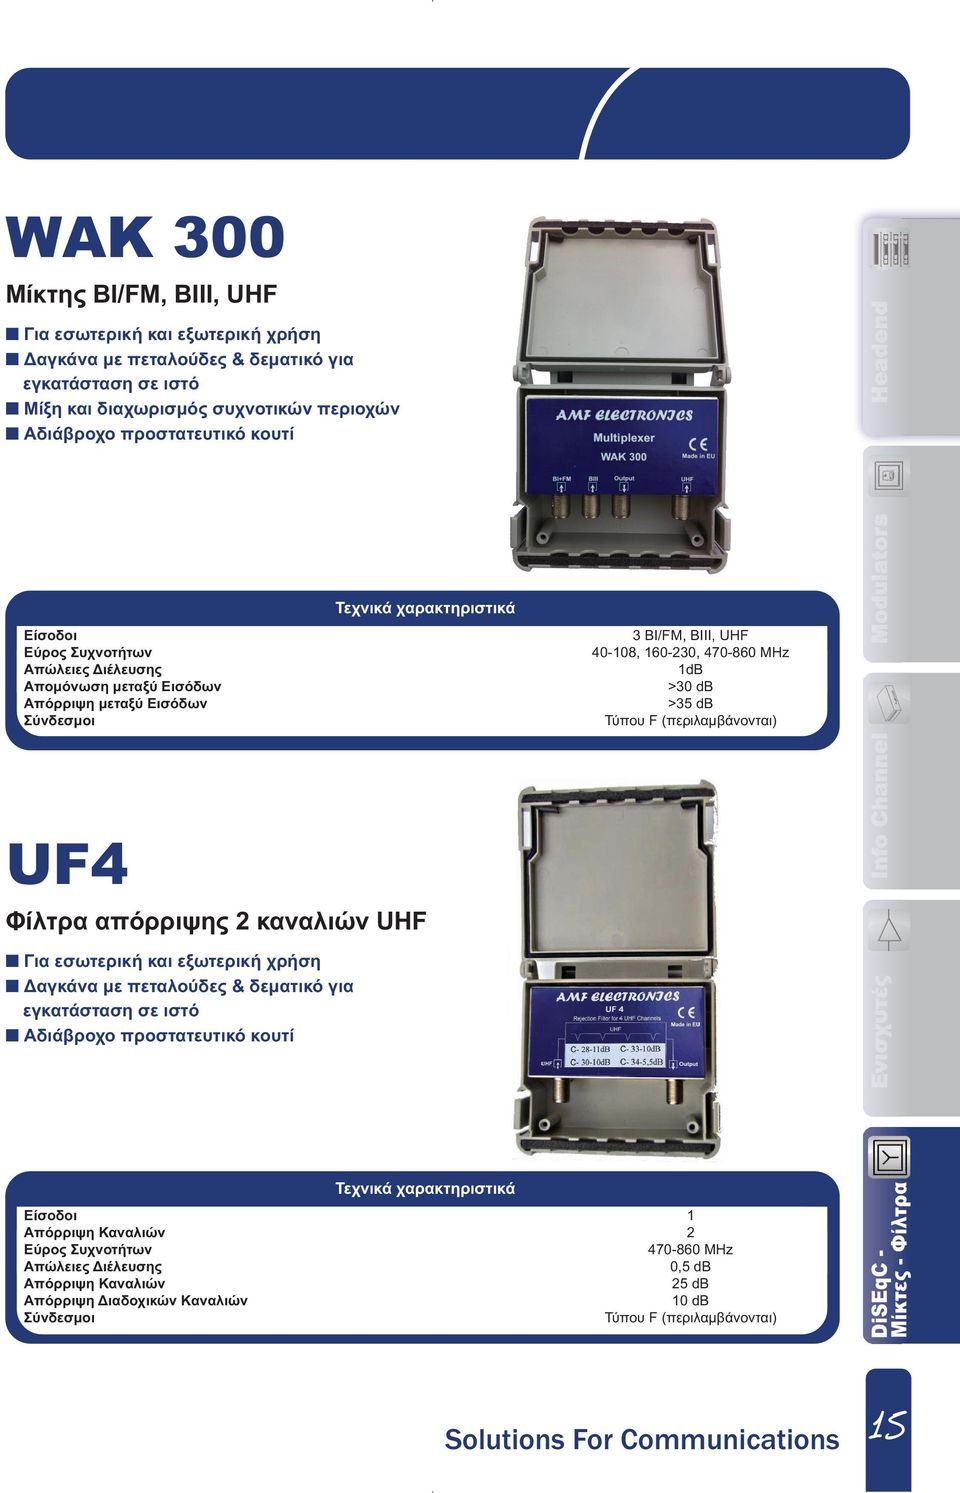 UF4 Φίλτρα απόρριψης 2 καναλιών UHF Για εσωτερική και εξωτερική χρήση αγκάνα µε πεταλούδες & δεµατικό για εγκατάσταση σε ιστό Αδιάβροχο προστατευτικό κουτί Είσοδοι 1 Απόρριψη Καναλιών 2 Εύρος